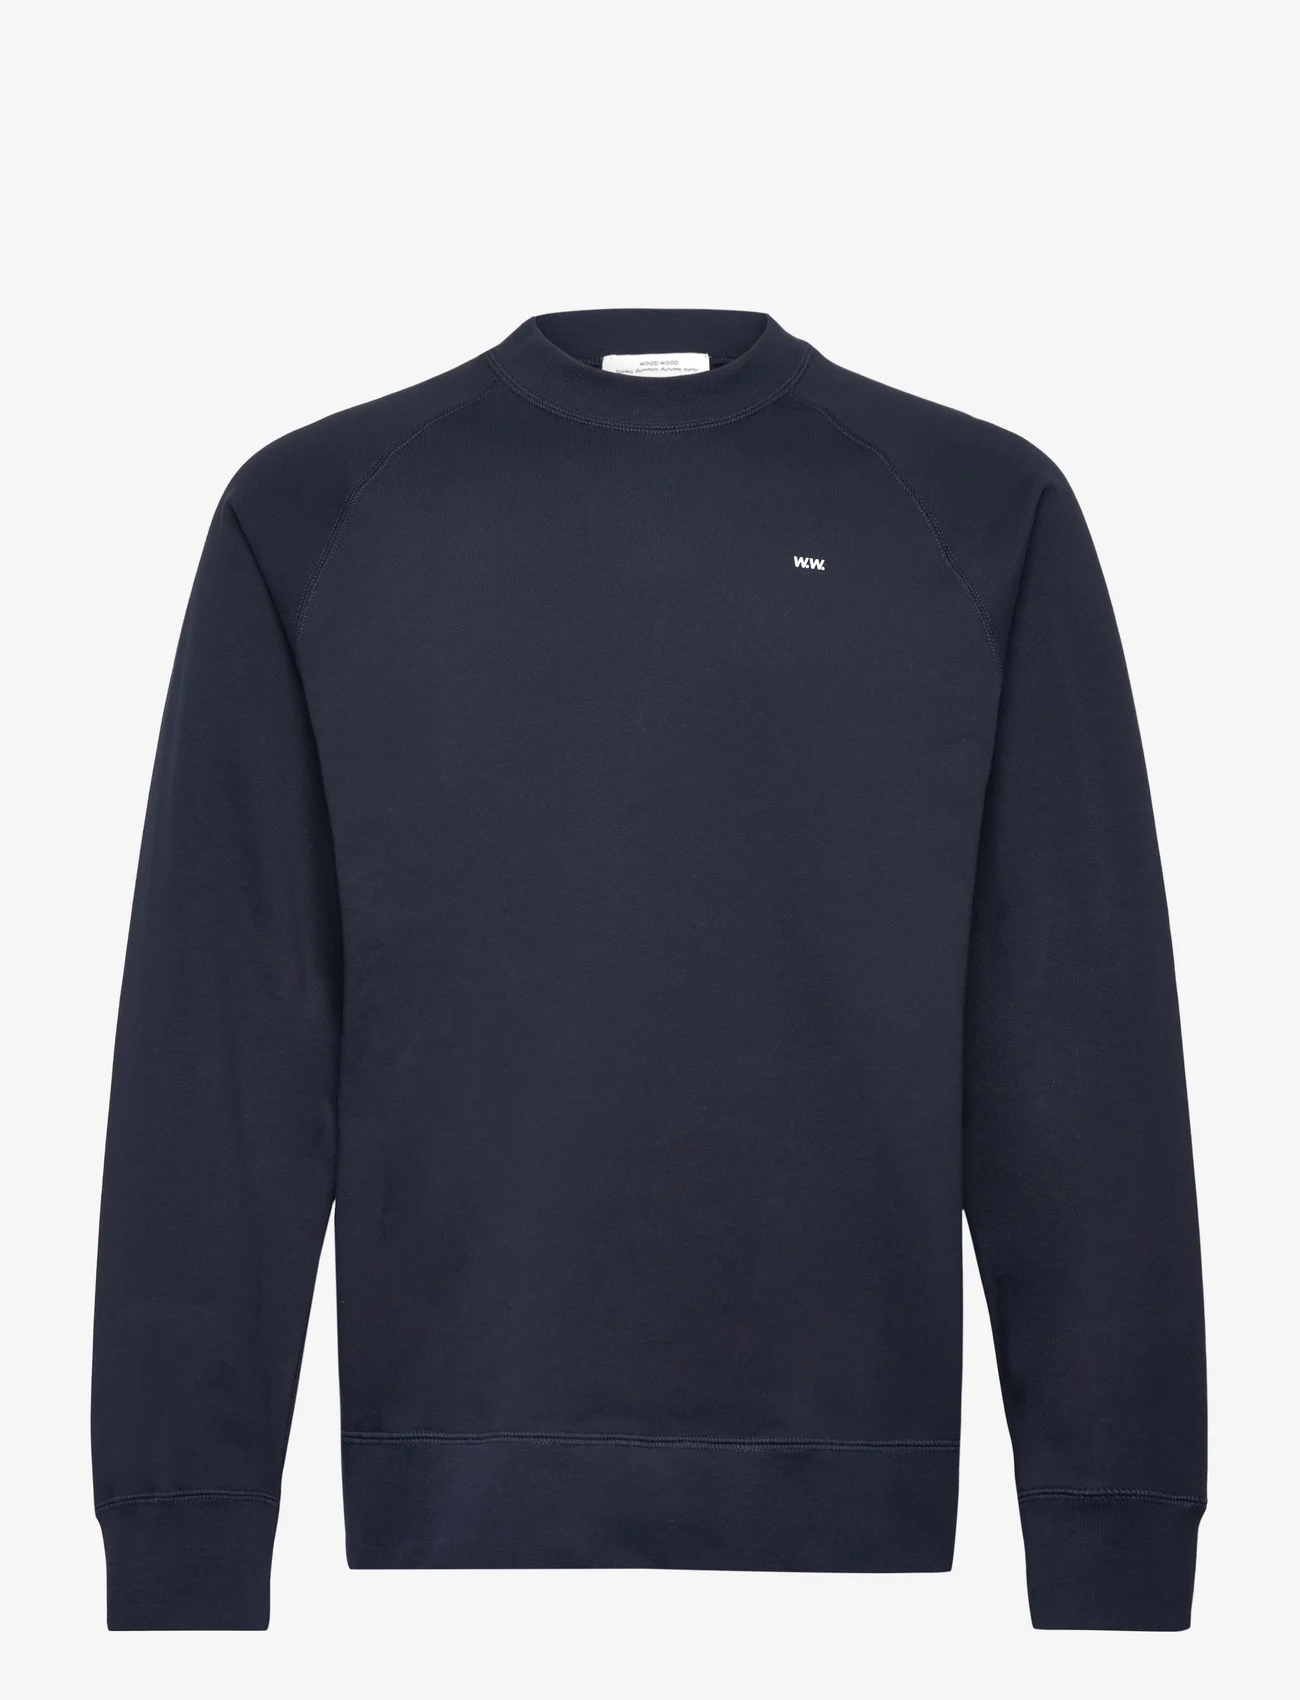 Wood Wood - Hester classic sweatshirt - bluzy z kapturem - navy - 0